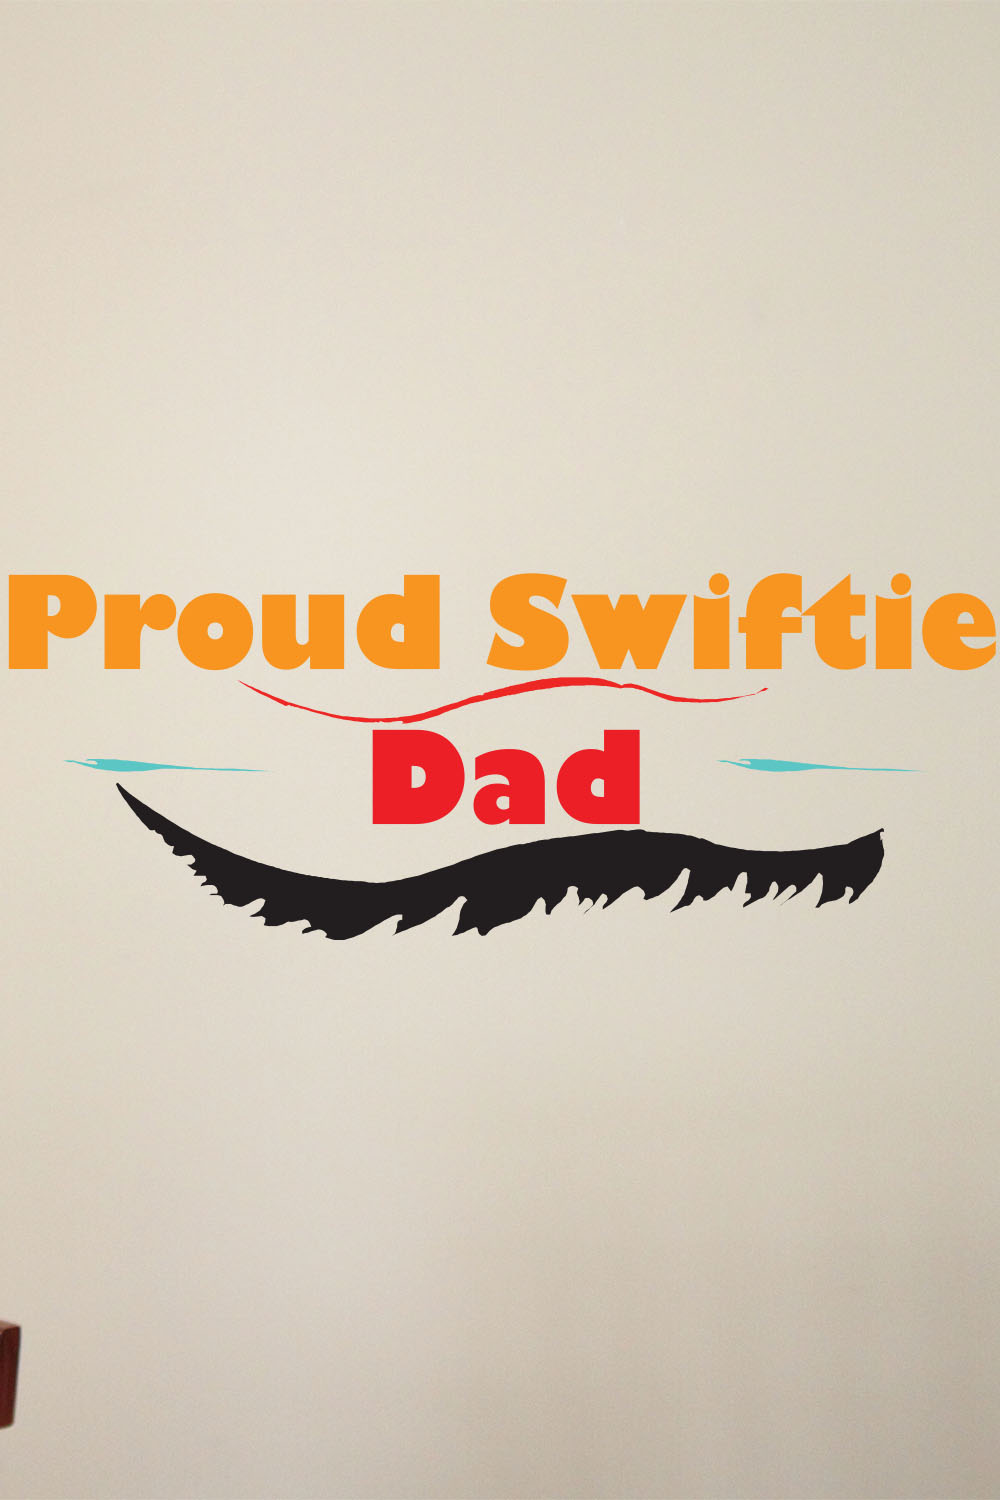 Proud Swiftie Dad pinterest preview image.